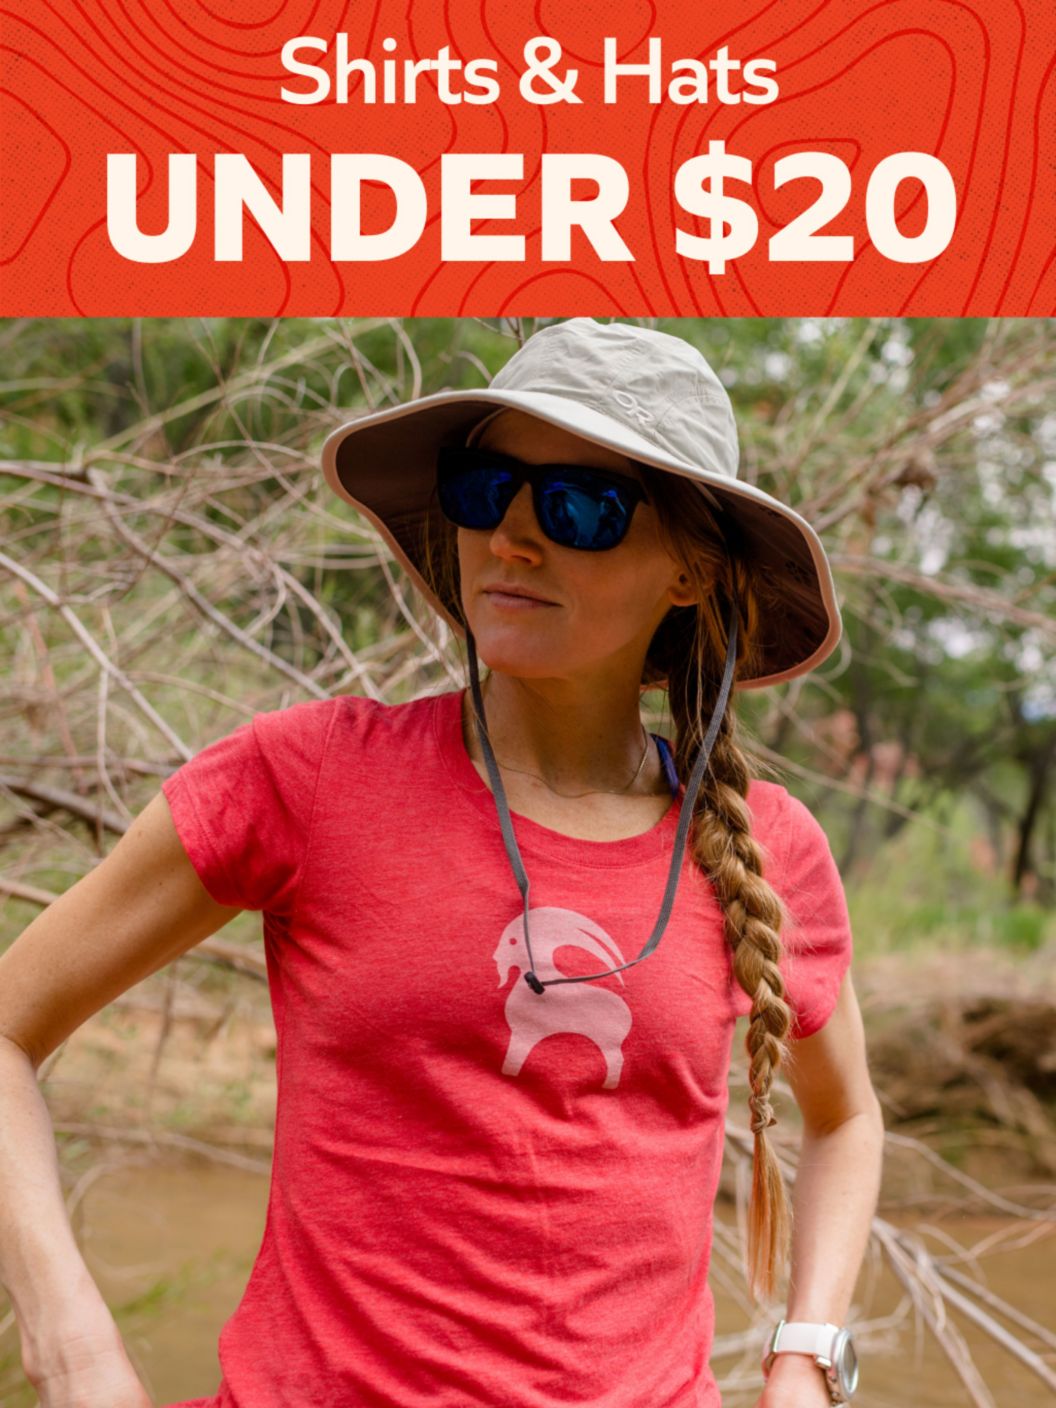 Shirts & Hats Under $20